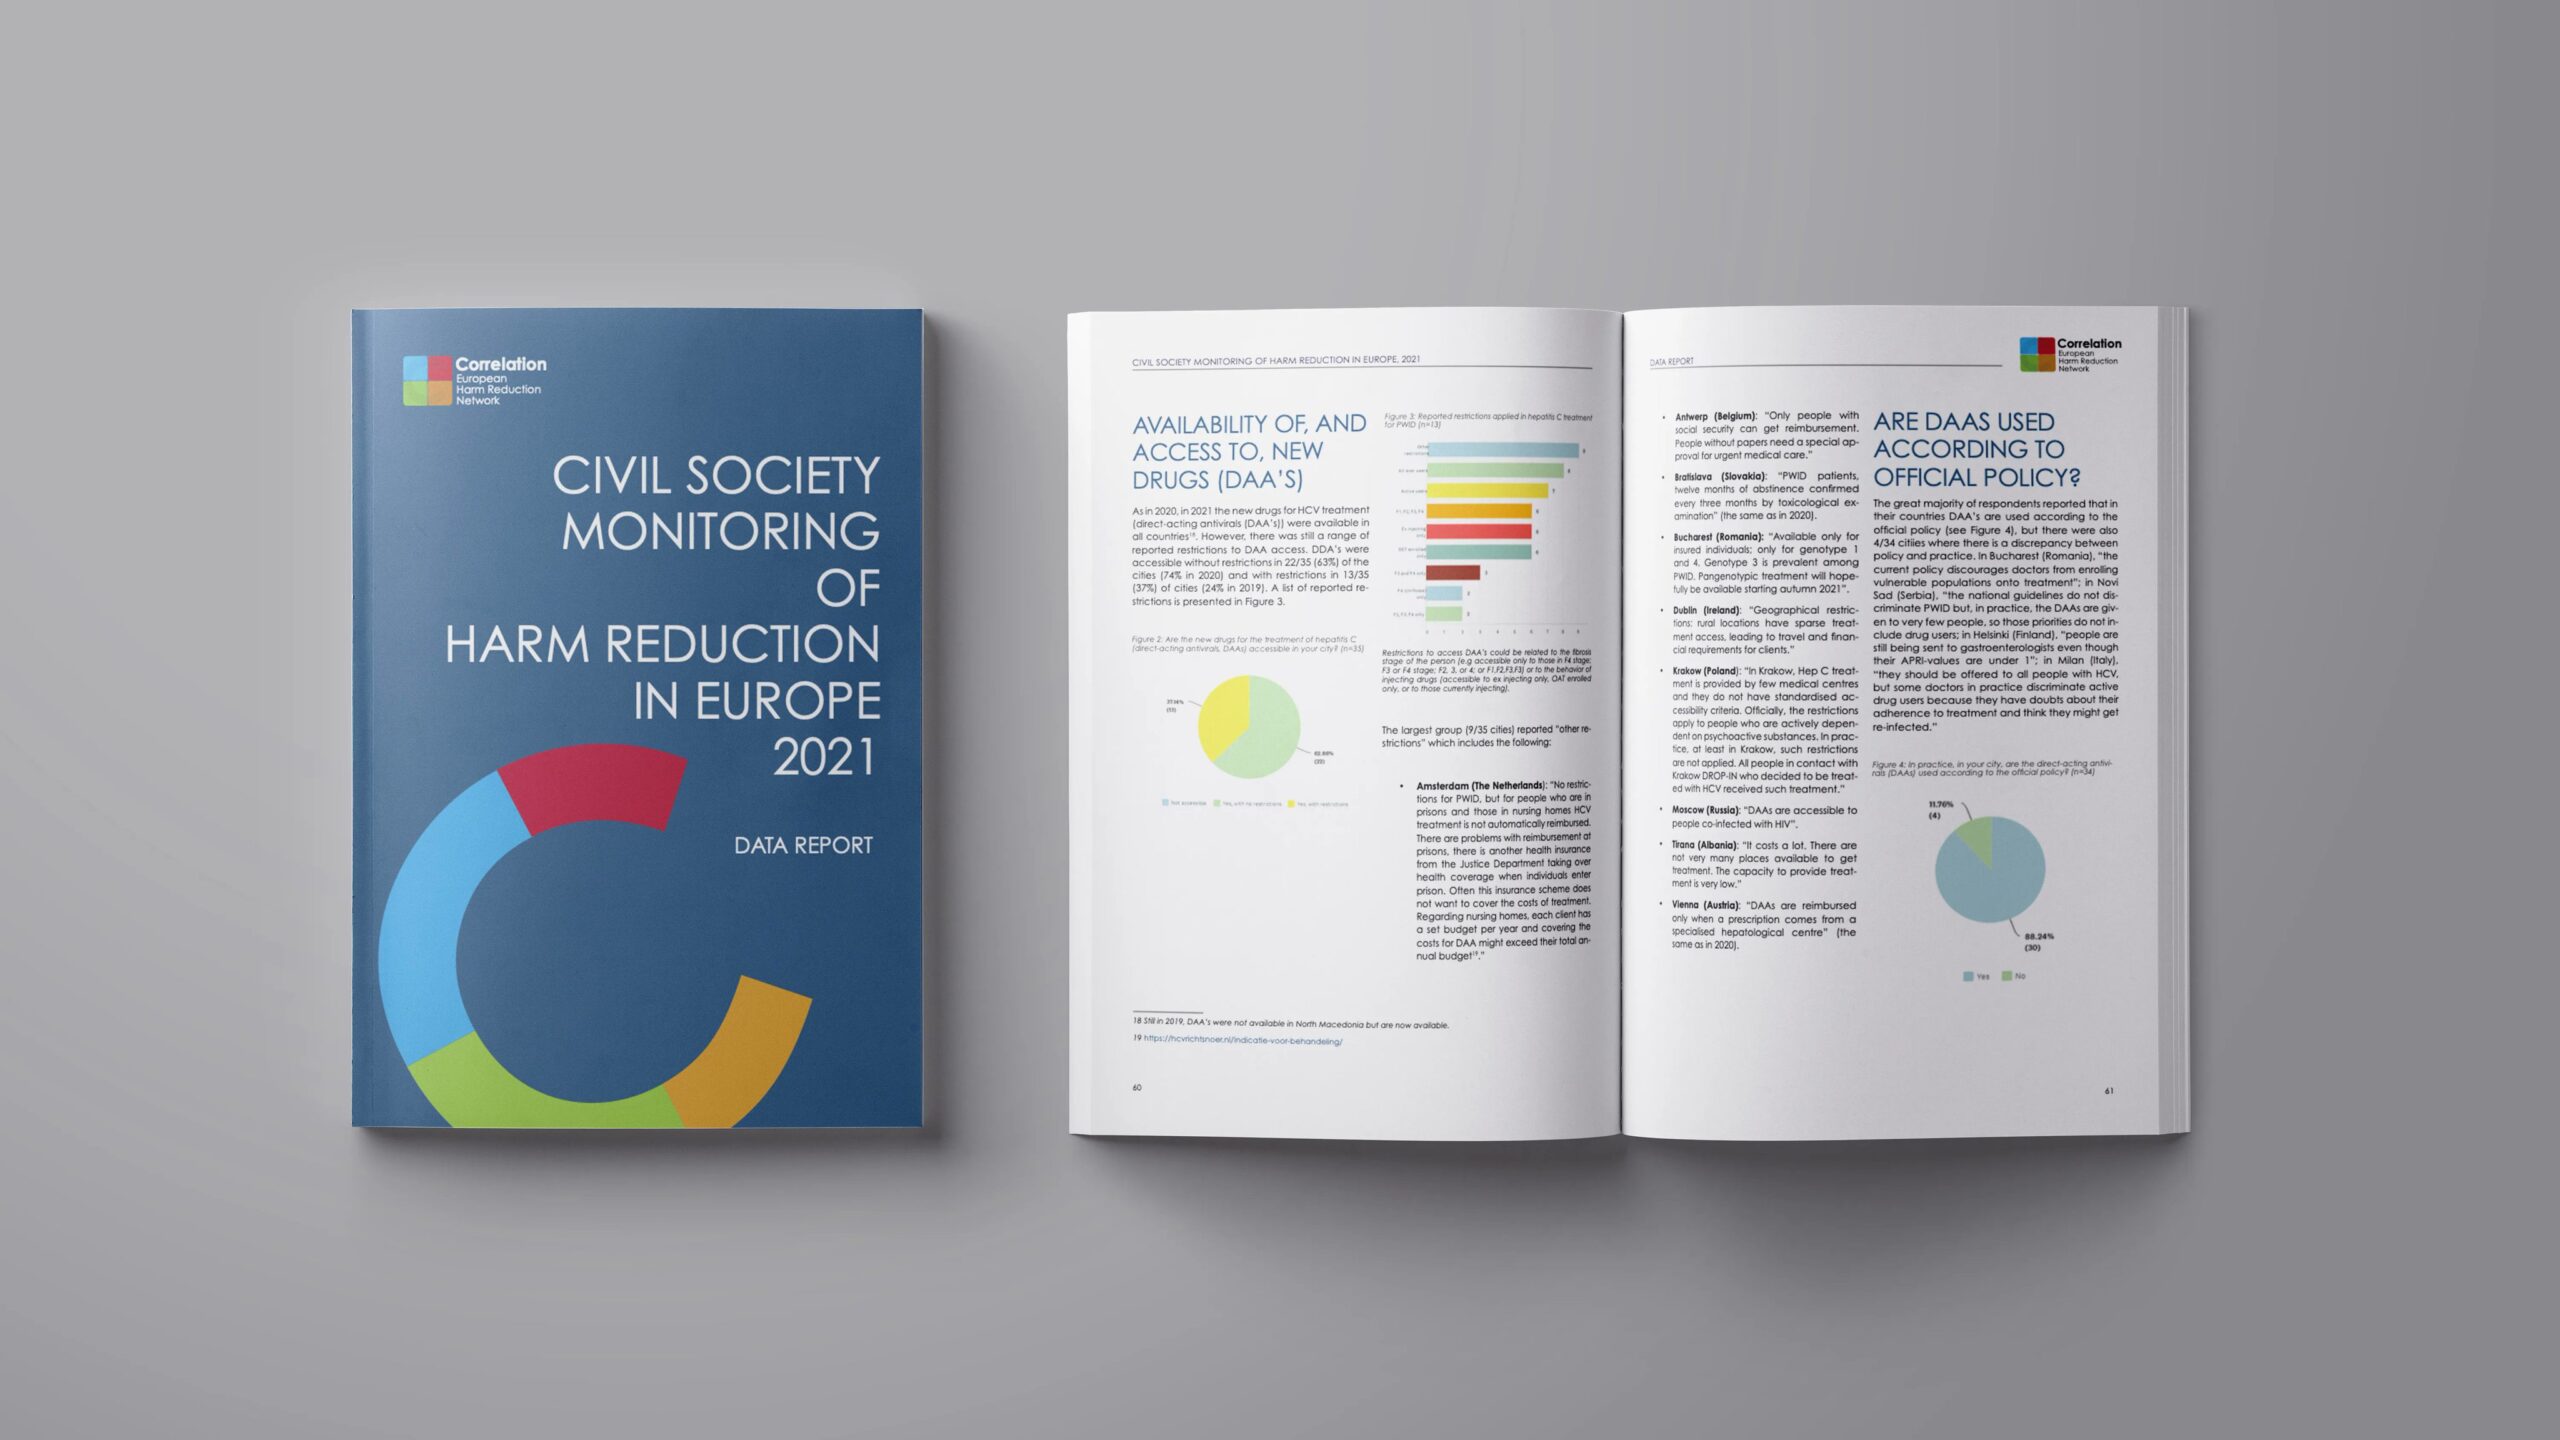 The civil society monitoring report 2021